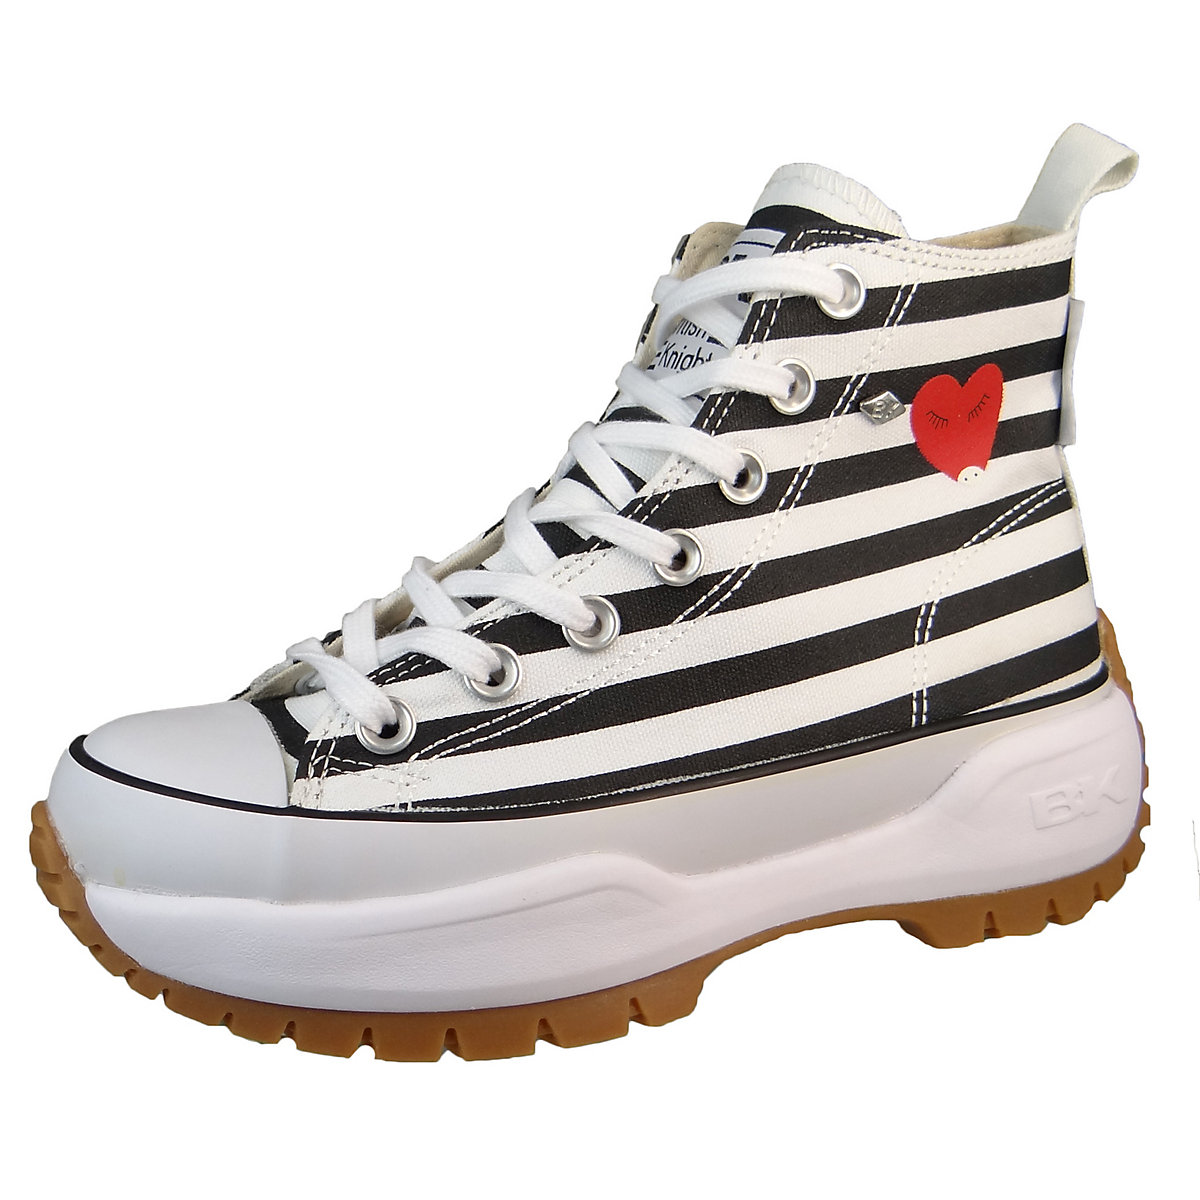 British Knights Damen High Sneaker Kaya Mid Fly High Top B51-3712 Weiß 01 White/Black/Heart Textil Sneakers Low weiß